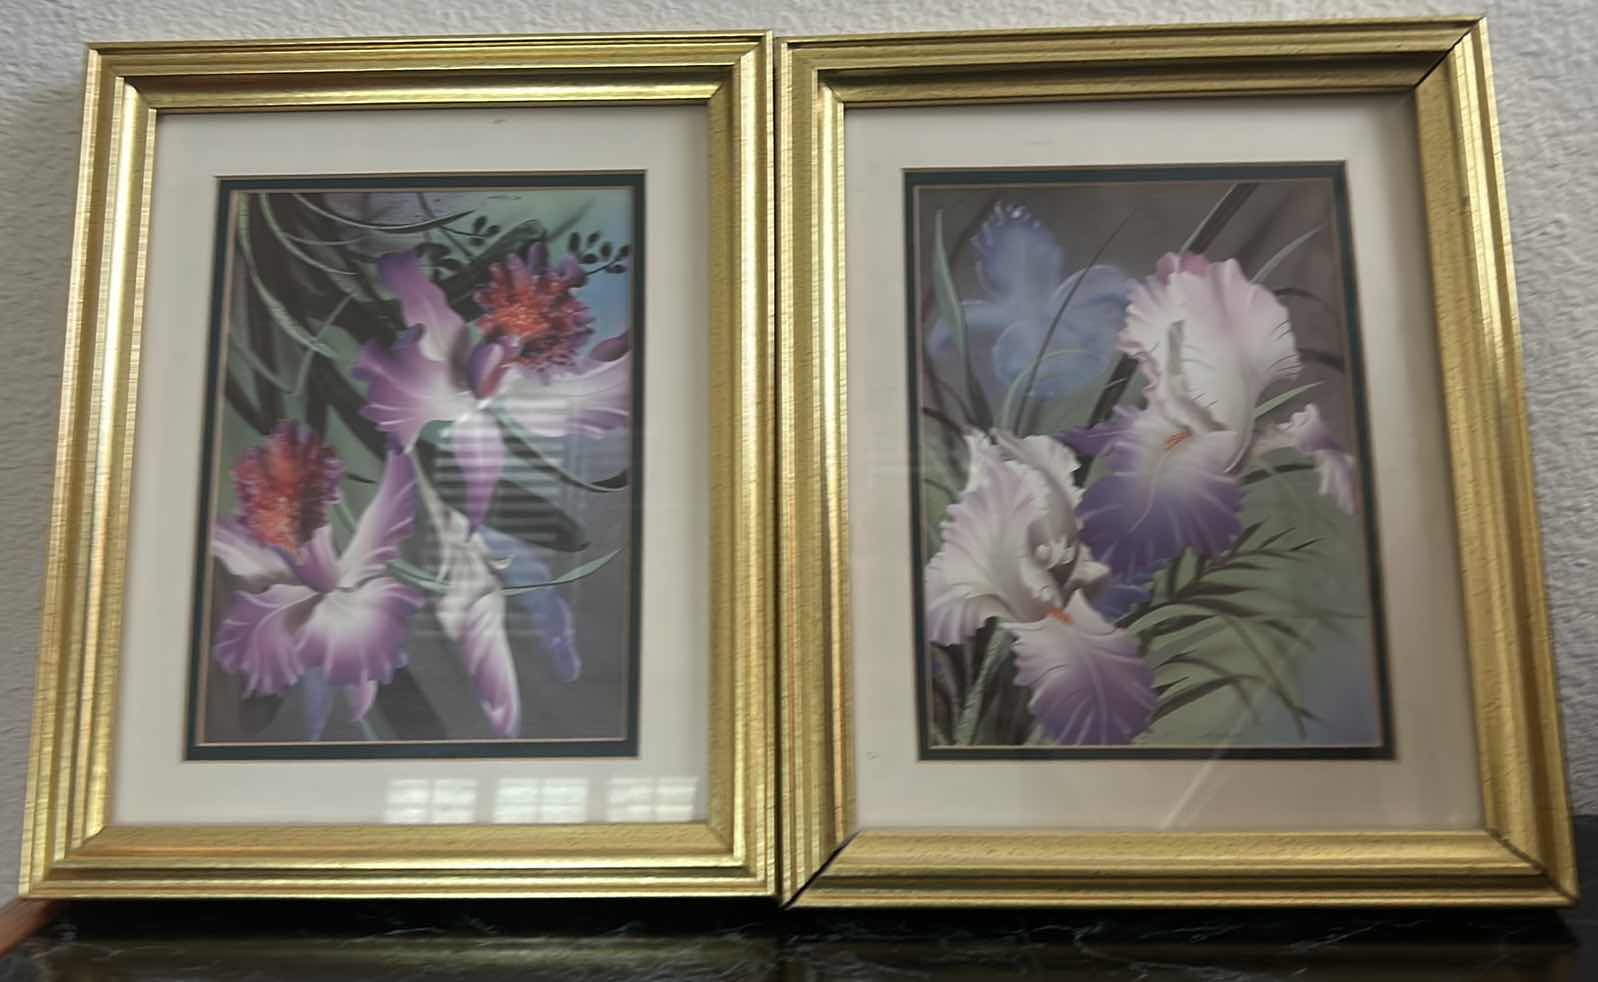 Photo 1 of 2 FRAMED ARTWORK ORCHIDS 9 1/2” x 11 1/2”